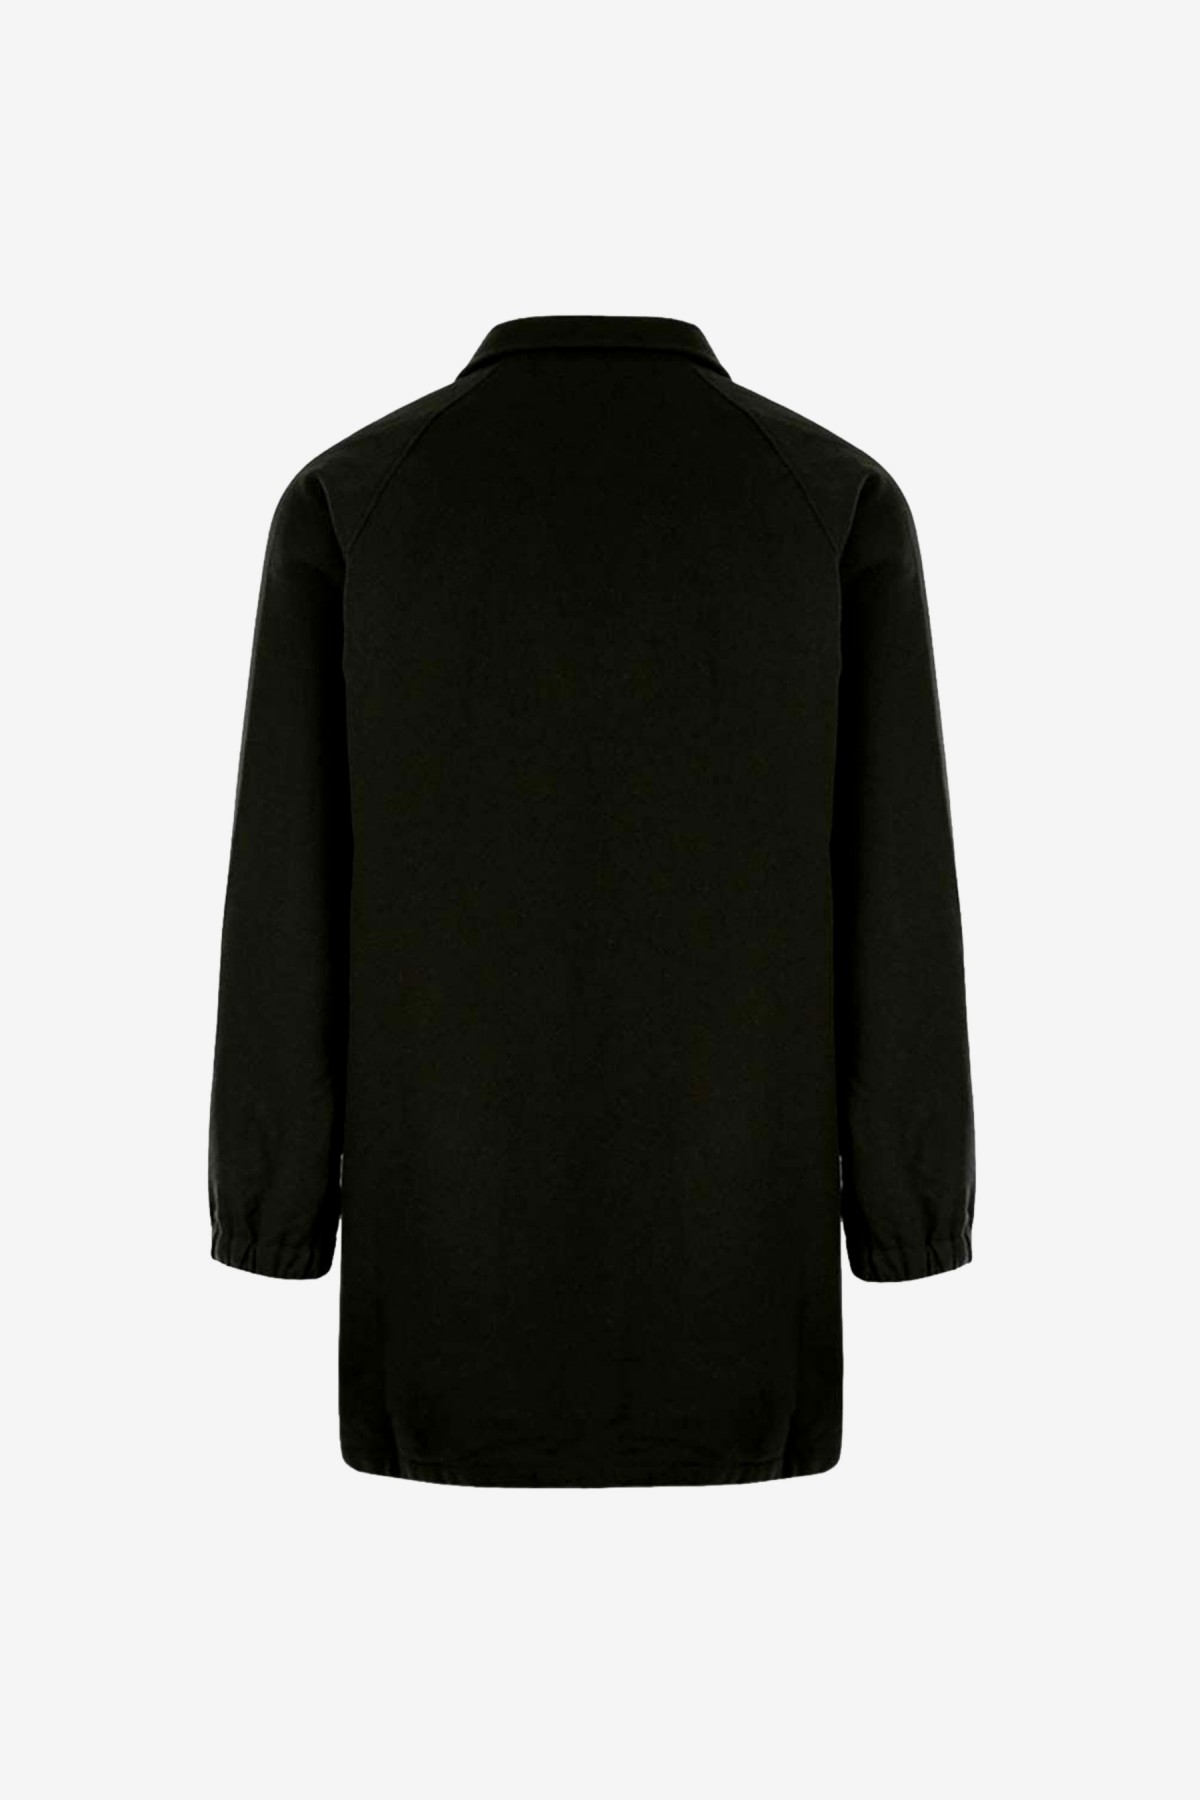 Gramicci Wool Blend Coach Jacket in Black